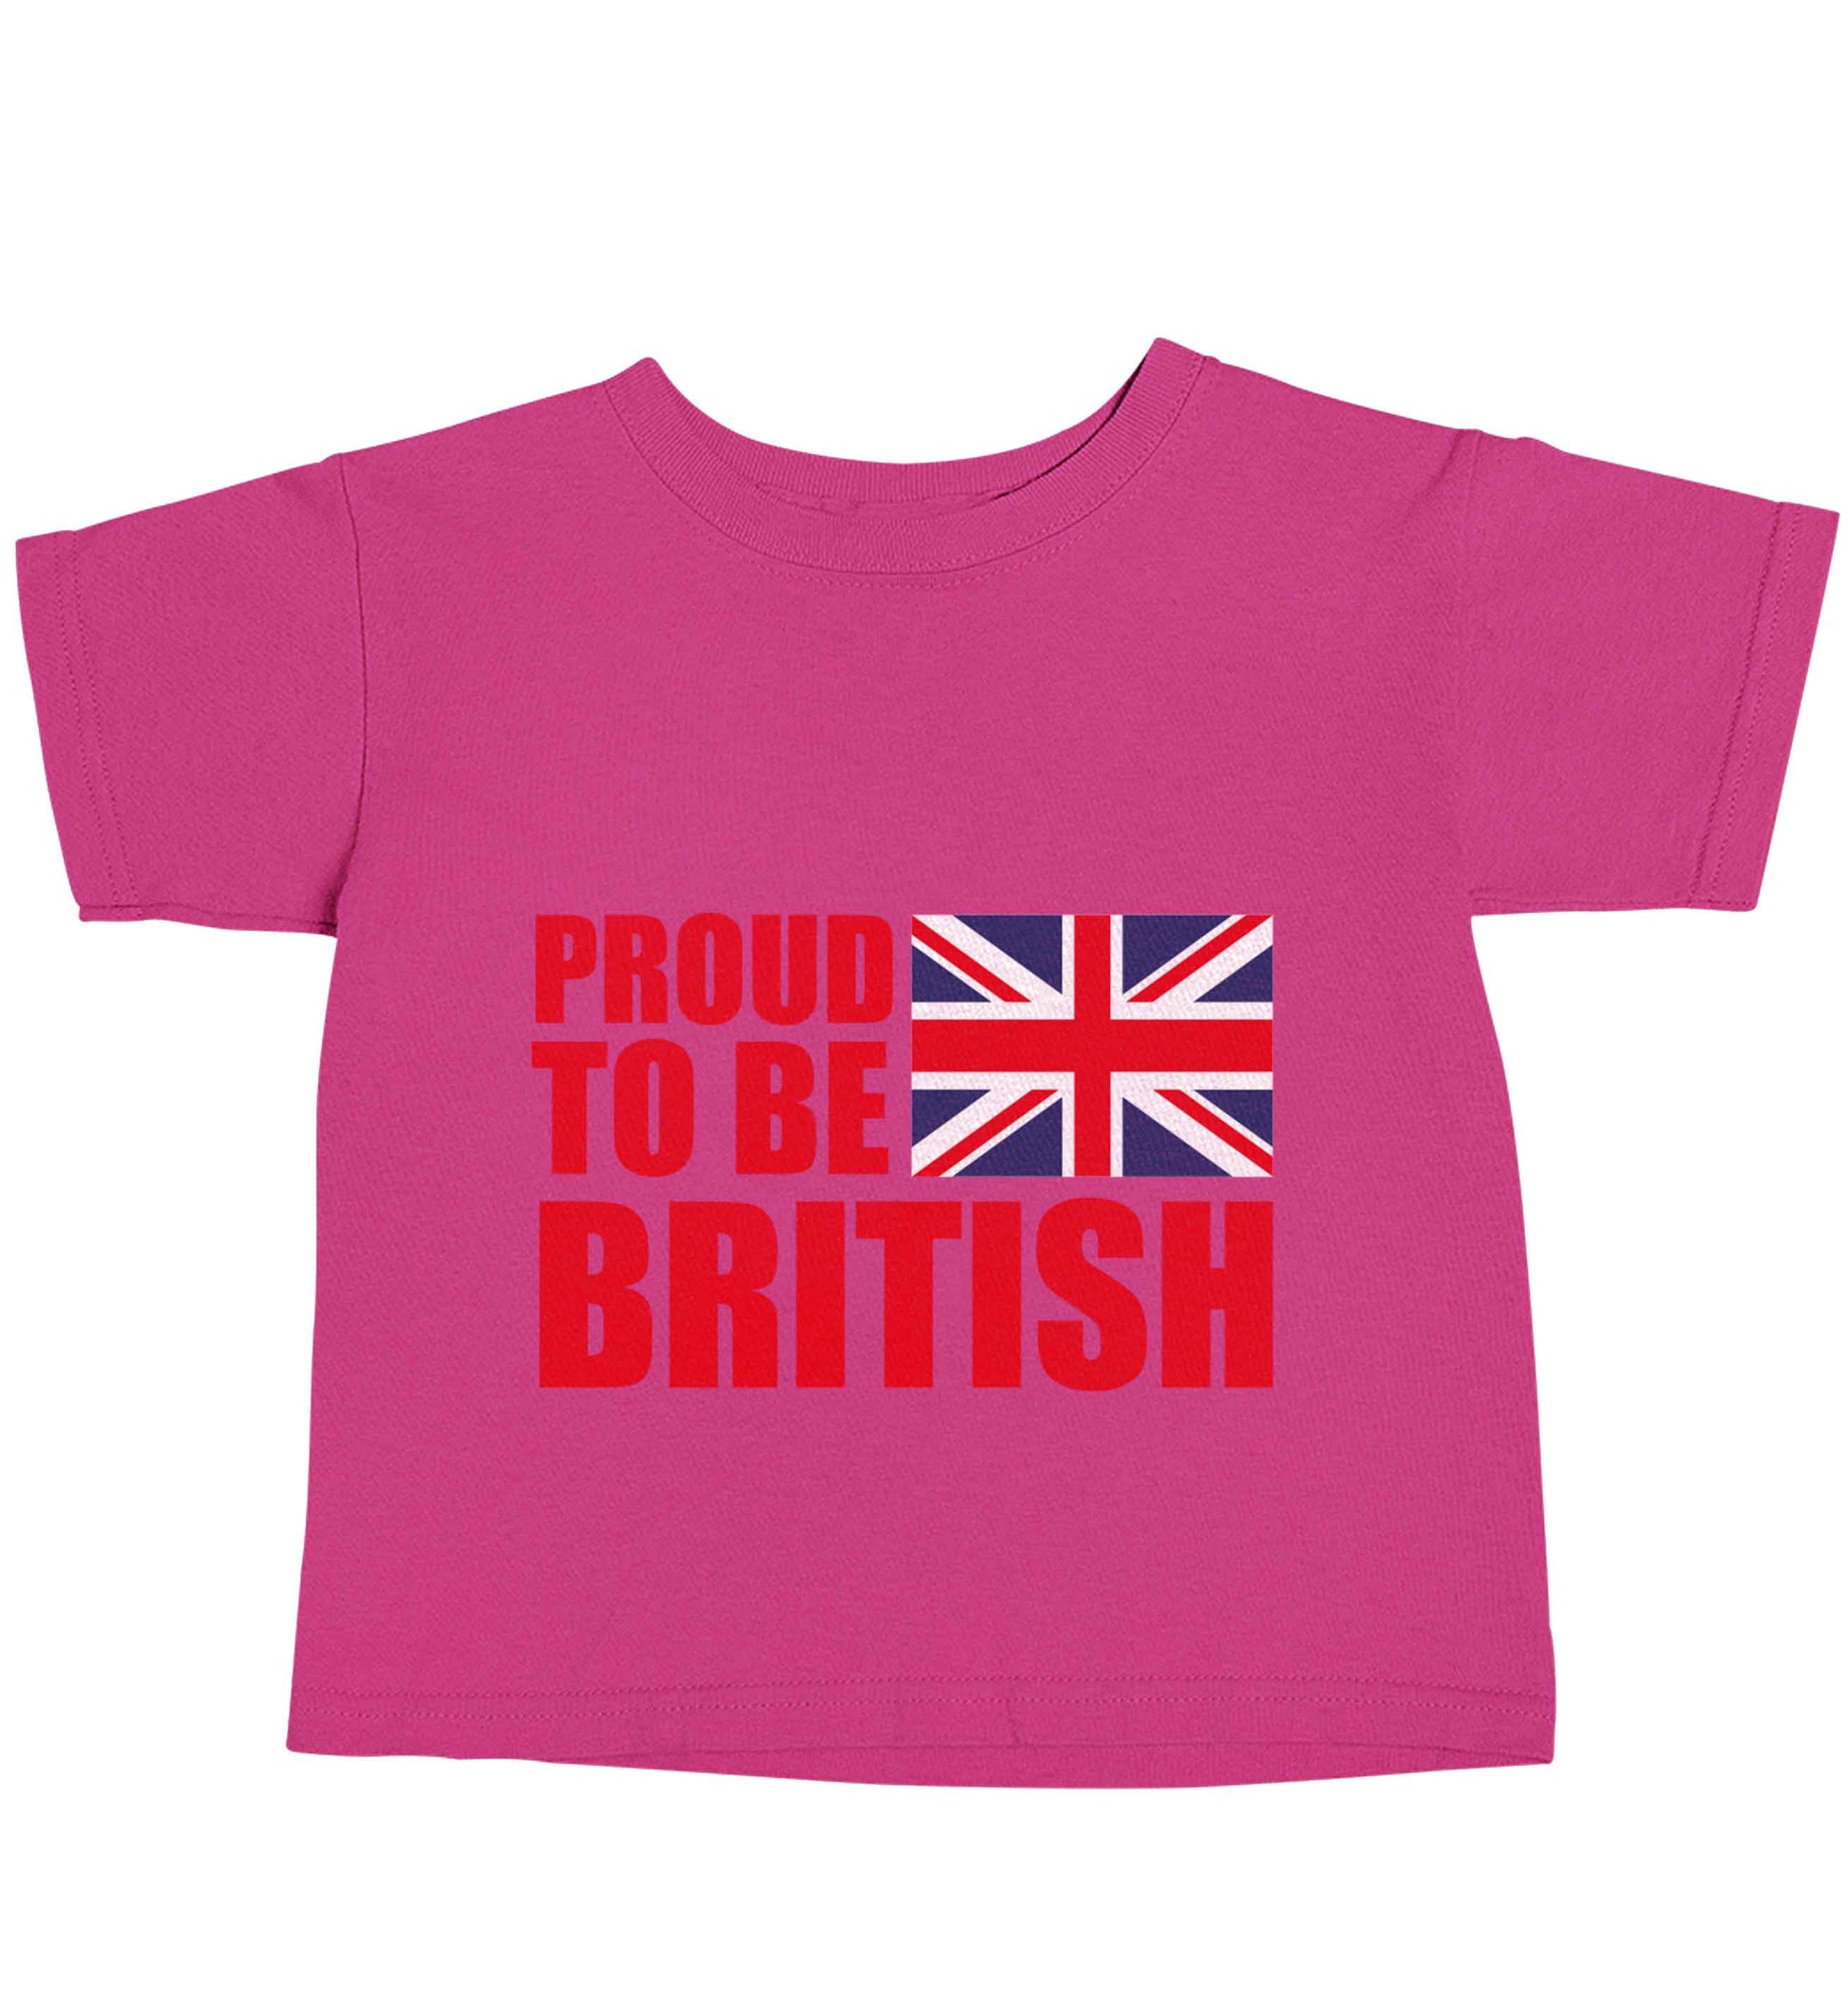 Proud to be British pink baby toddler Tshirt 2 Years